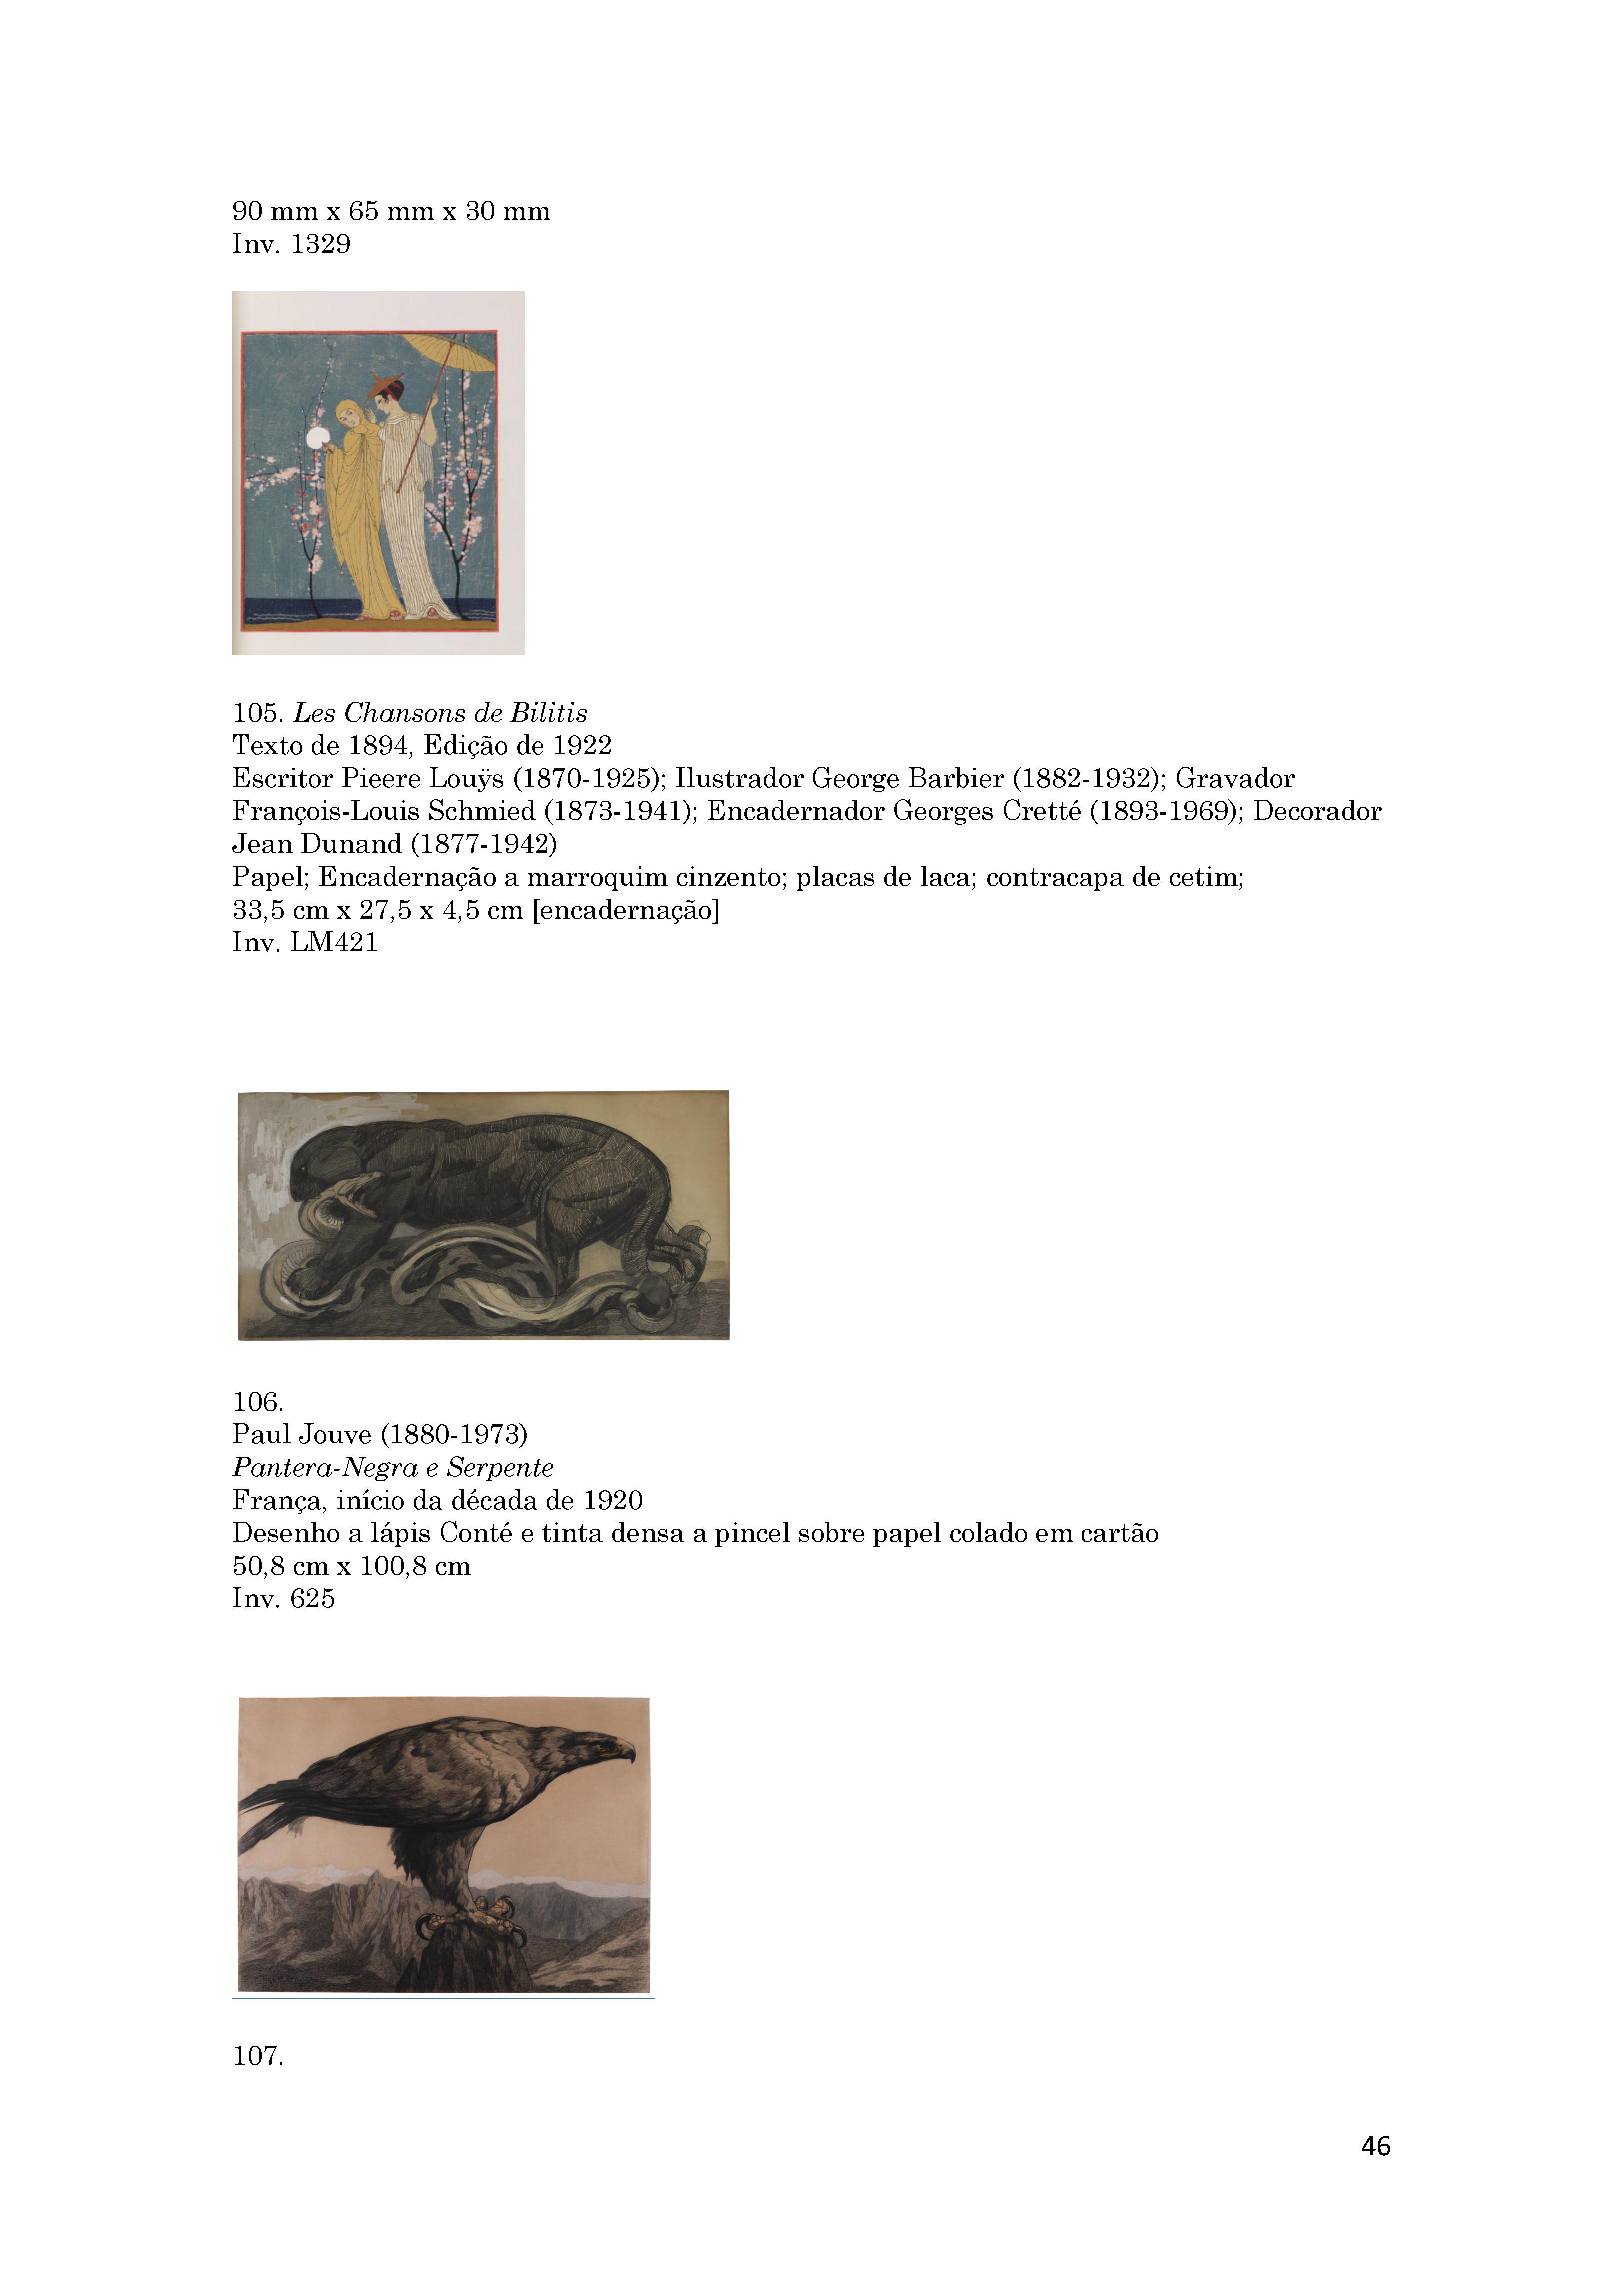 Lista_Vidros_Lalique_25.09.2020_1.46